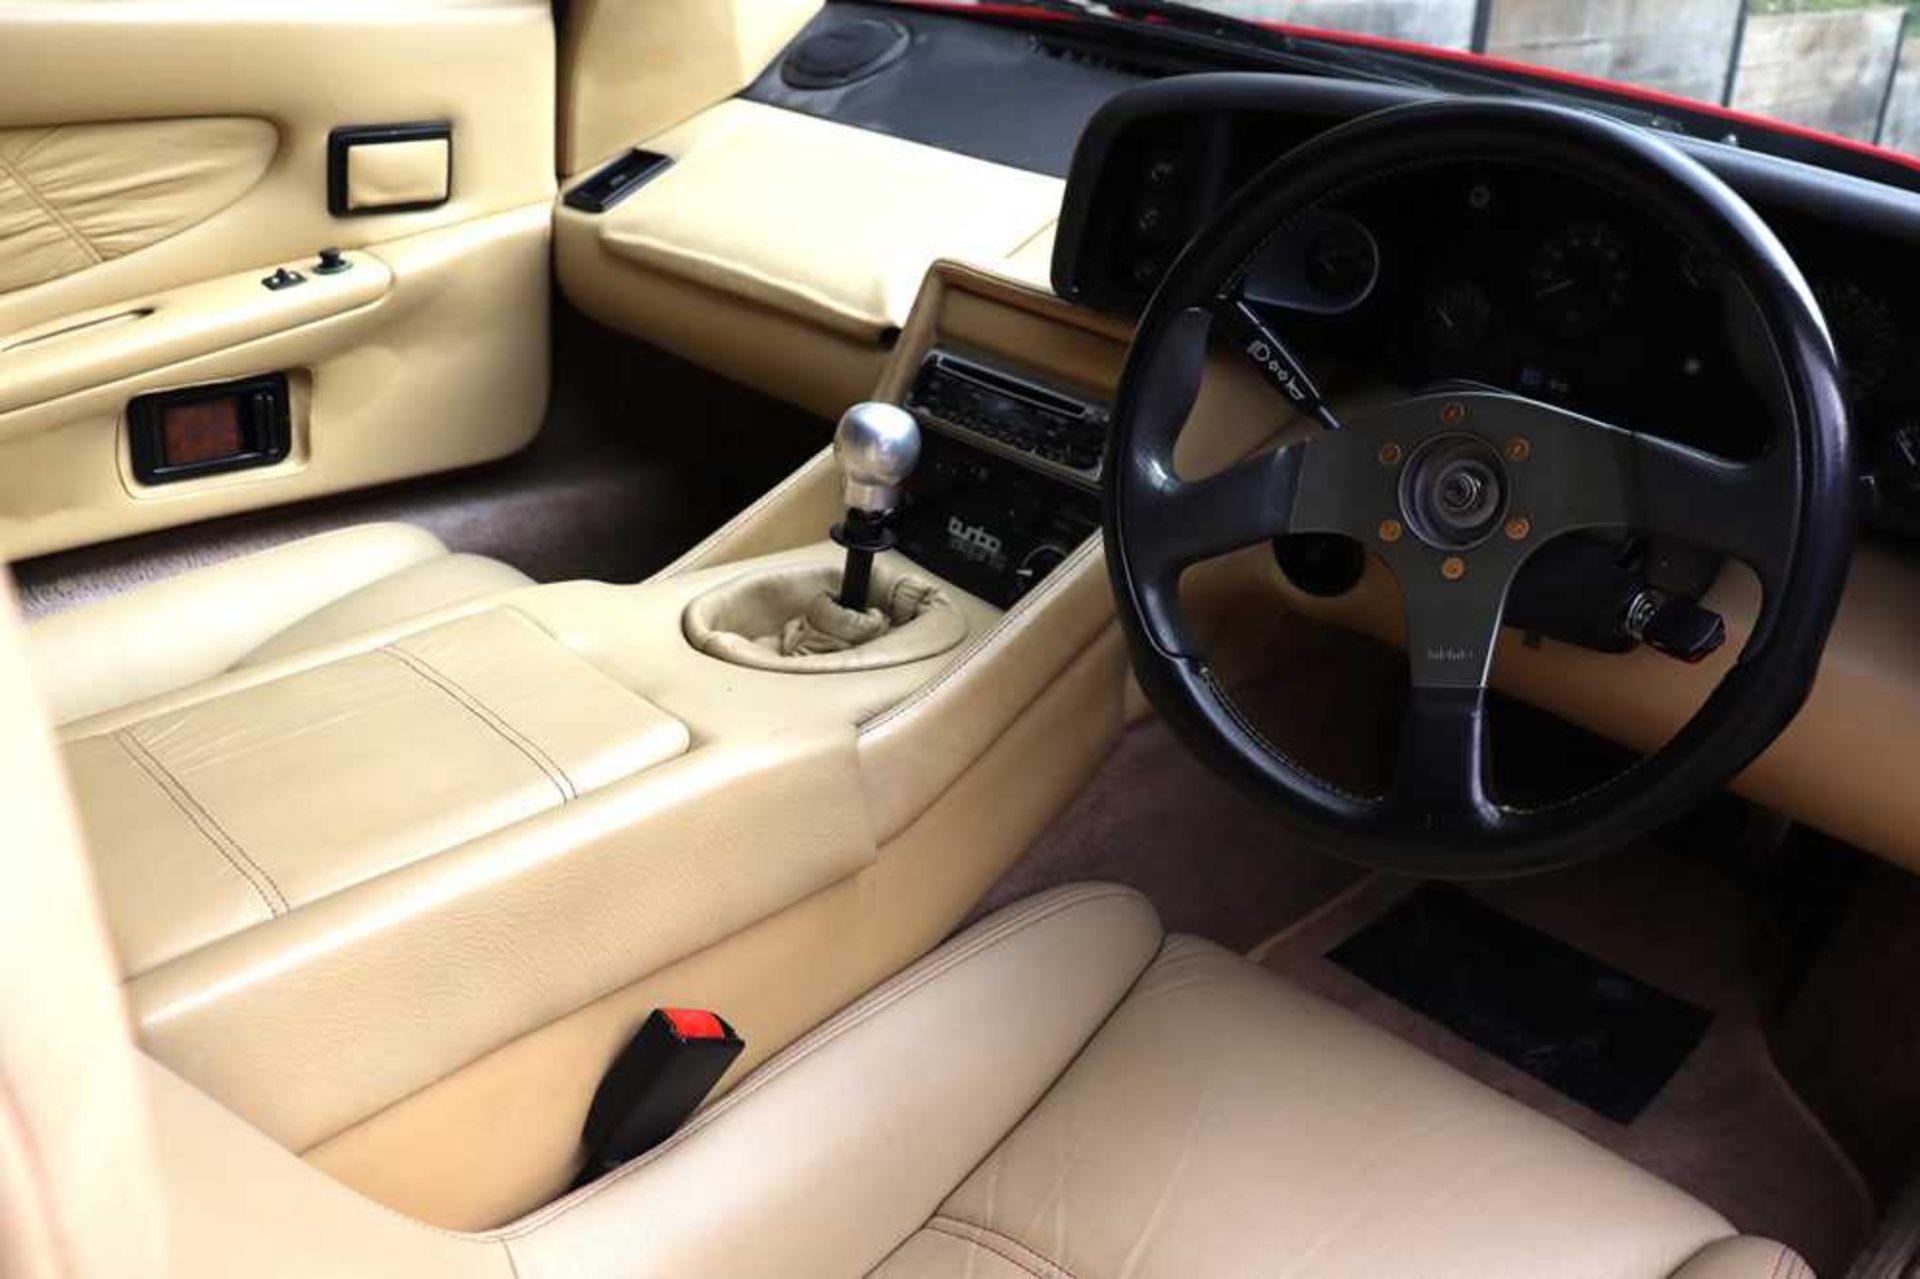 1989 Lotus Esprit Turbo Just 37,000 recorded miles - Image 42 of 72